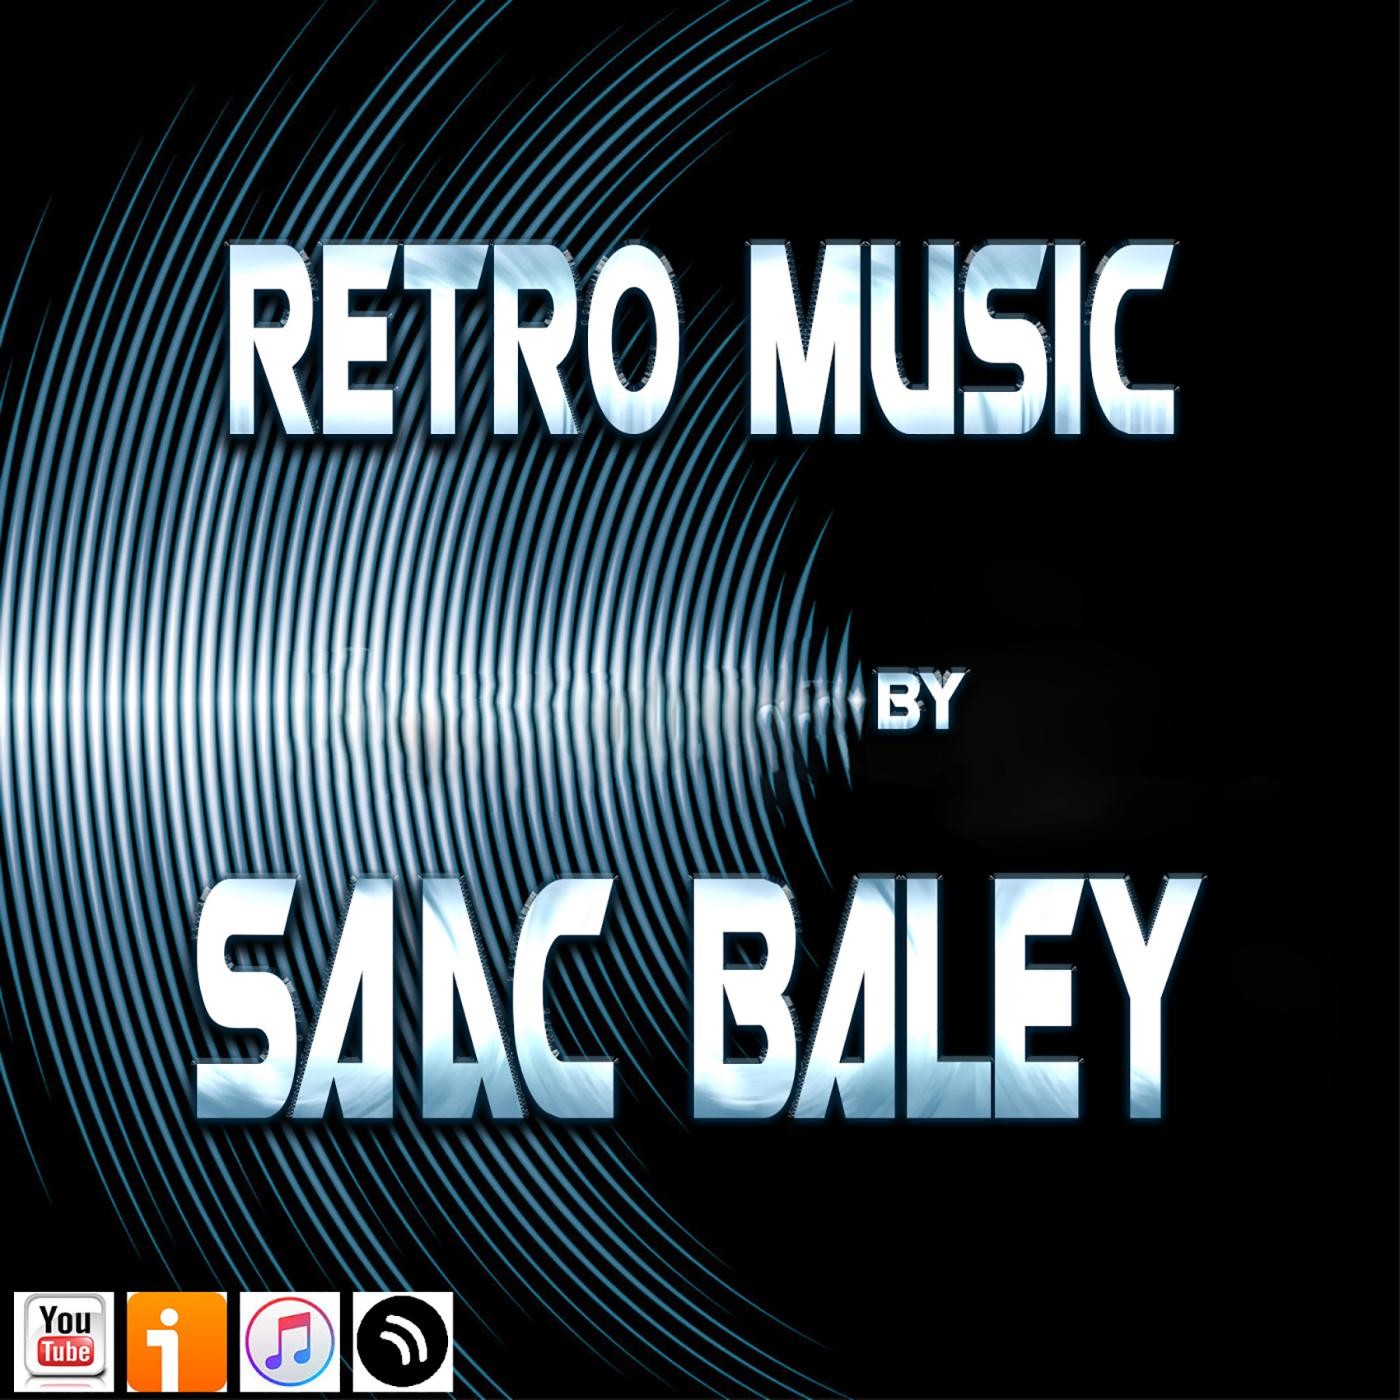 Retro Music by Saac Baley